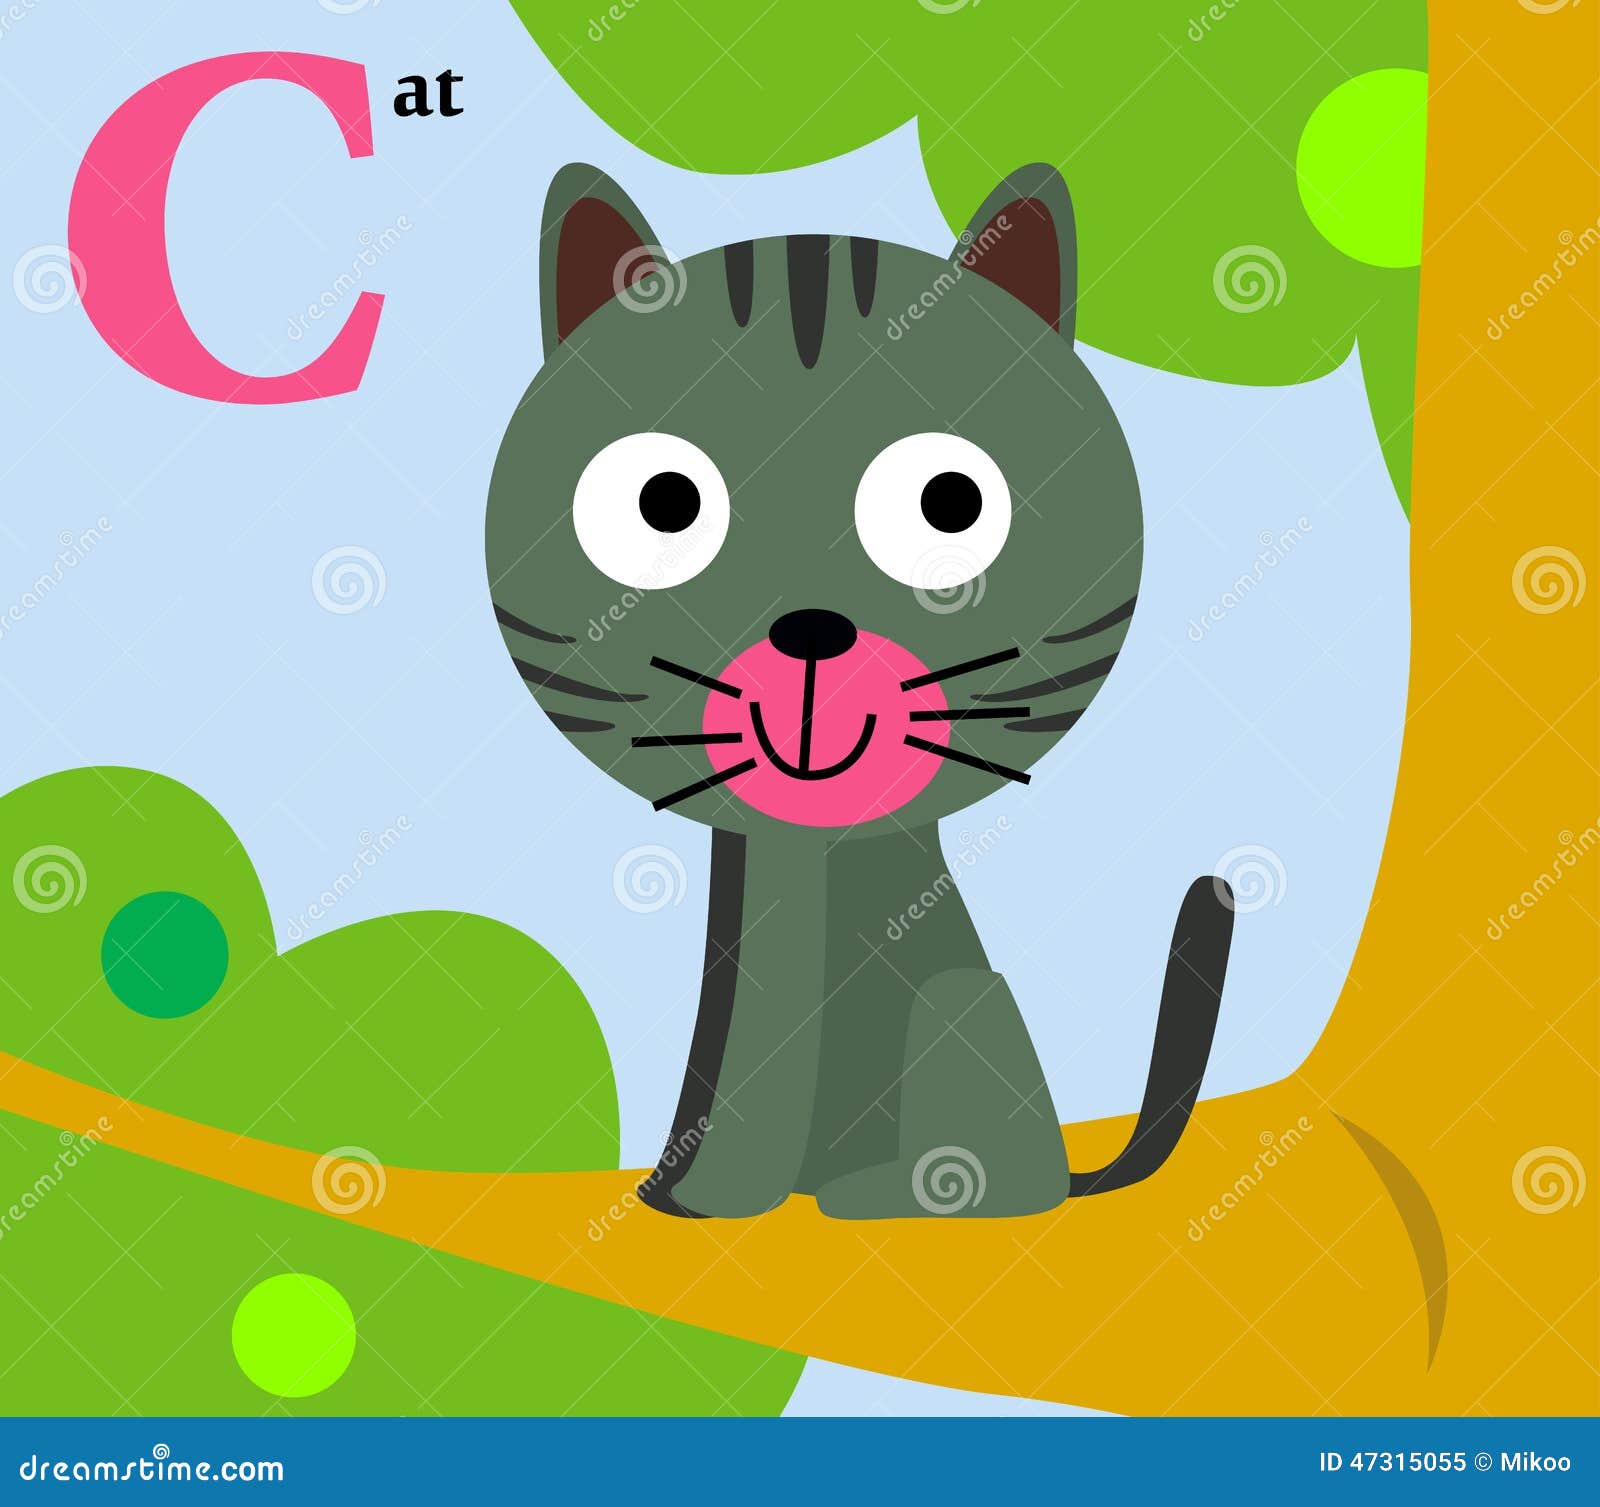 cat alphabet clipart - photo #16